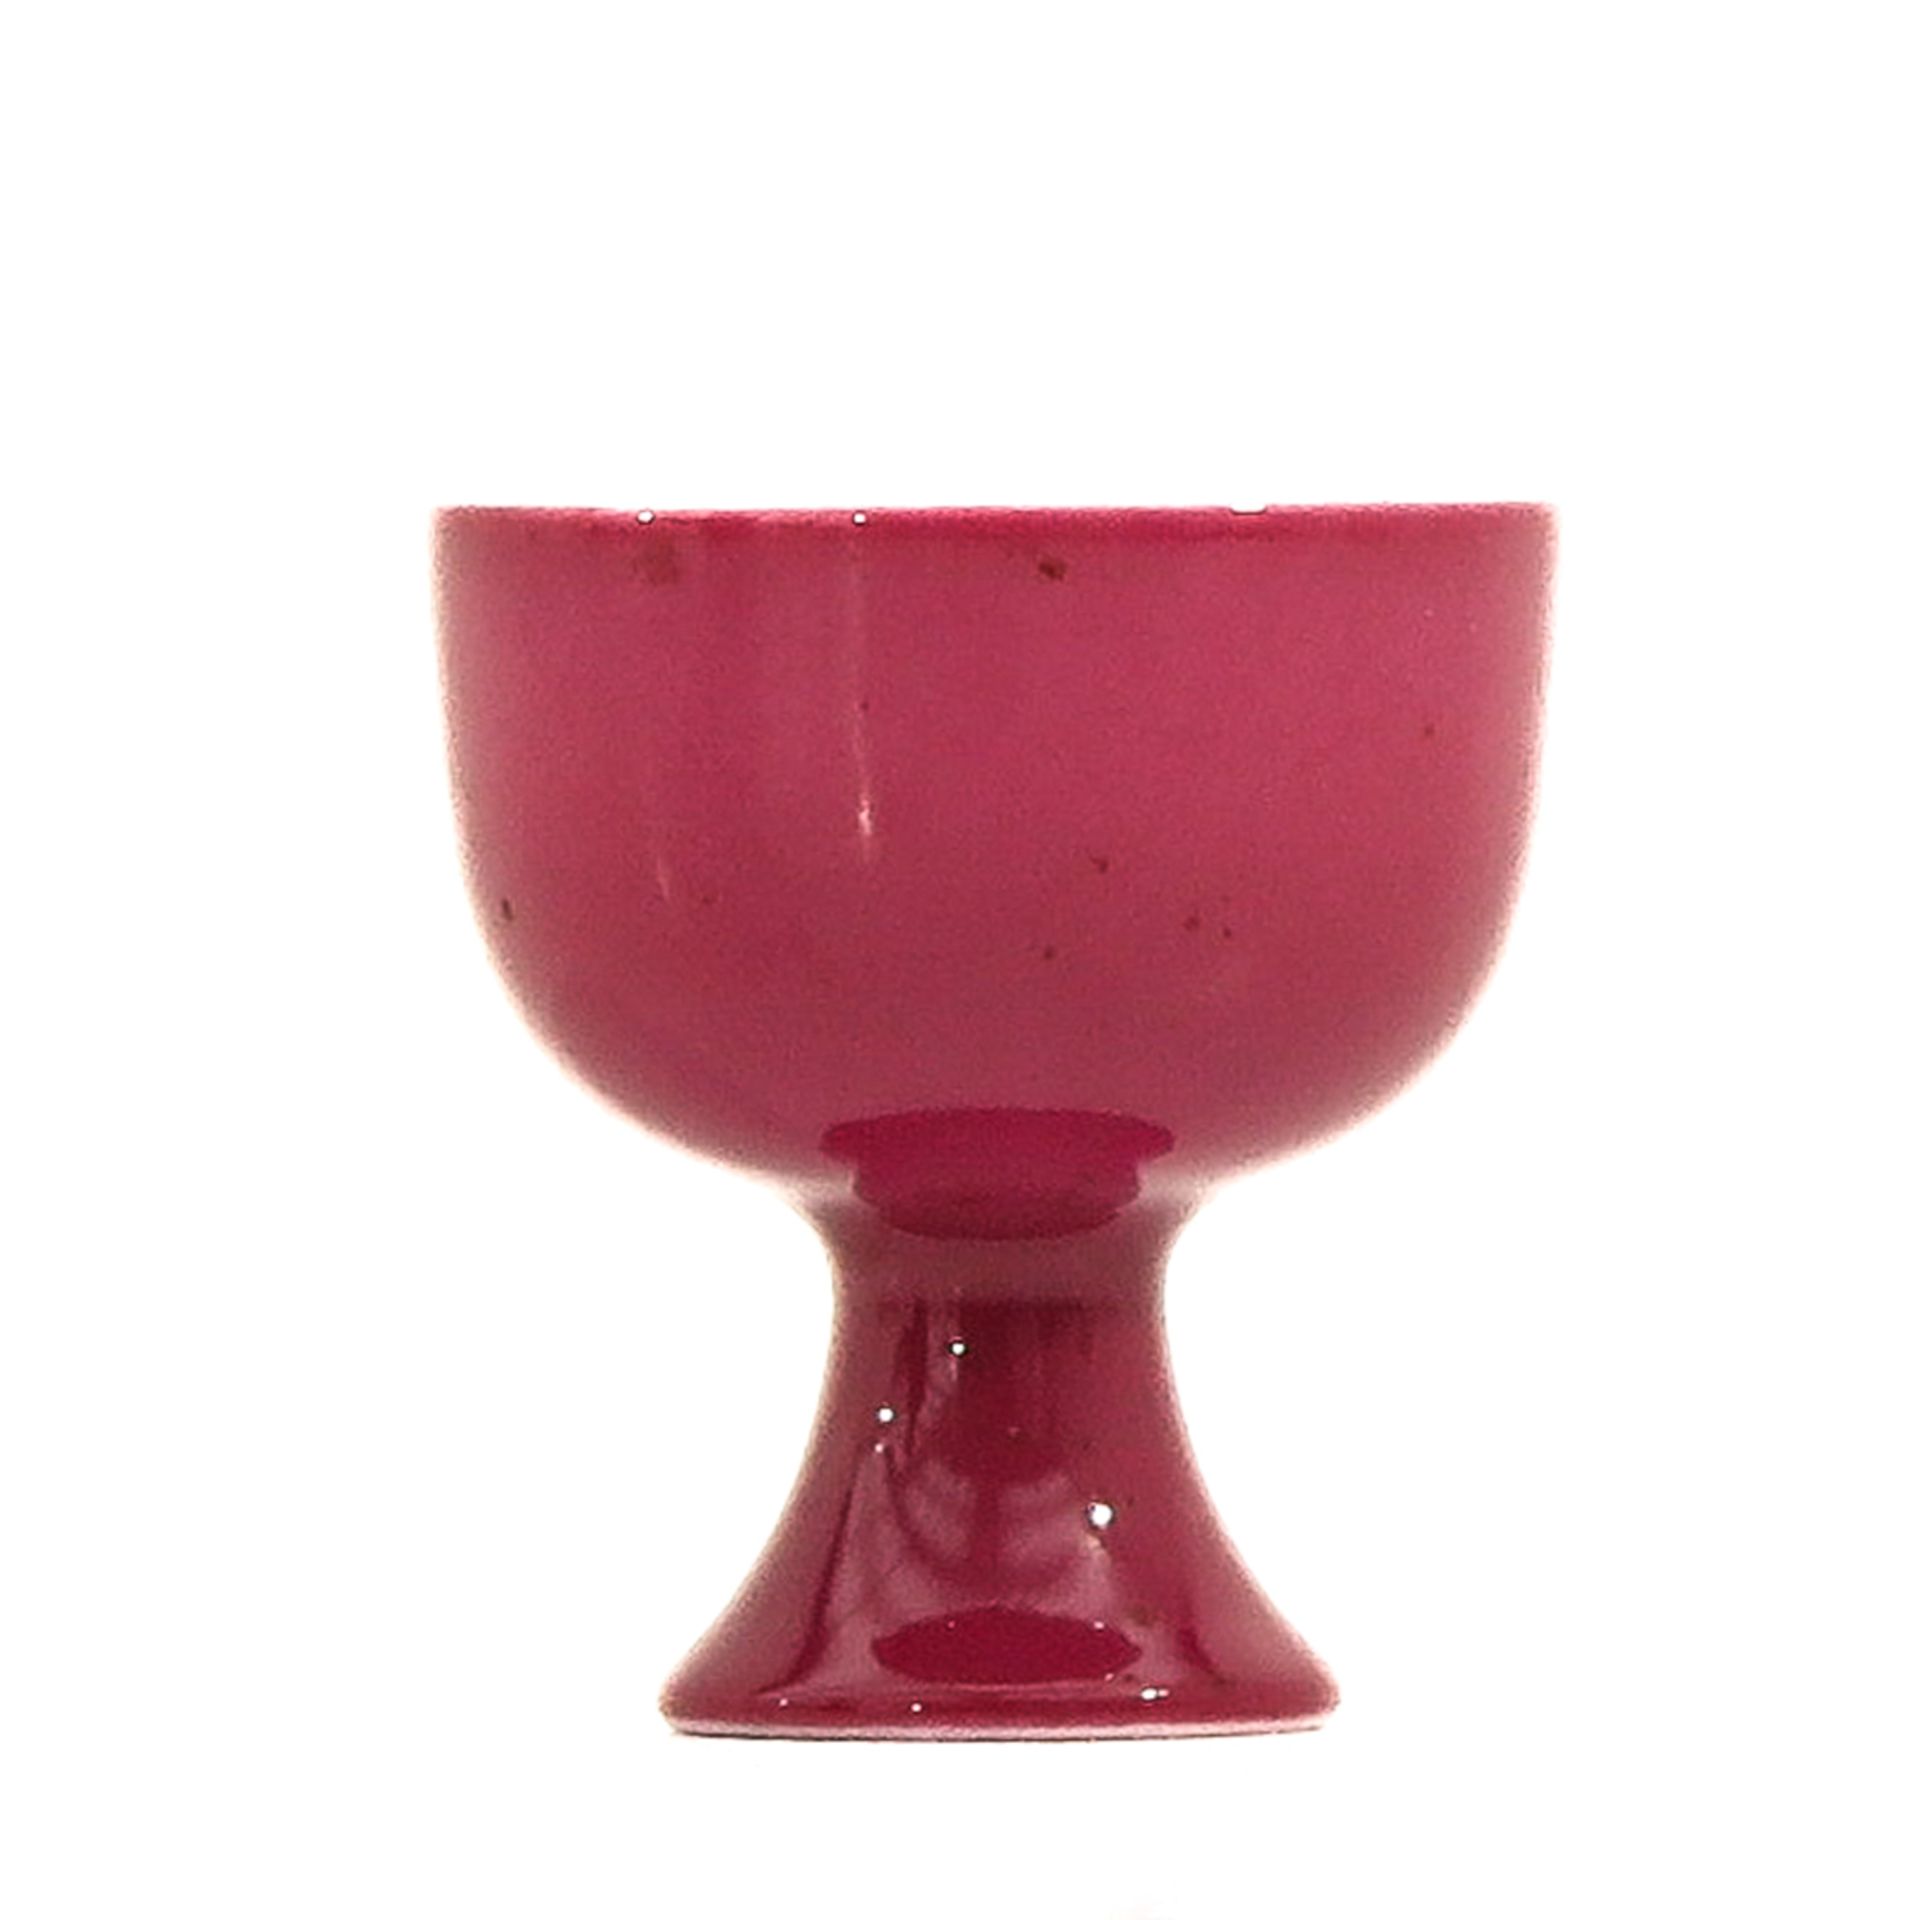 A Miniature Stem Cup - Bild 3 aus 9